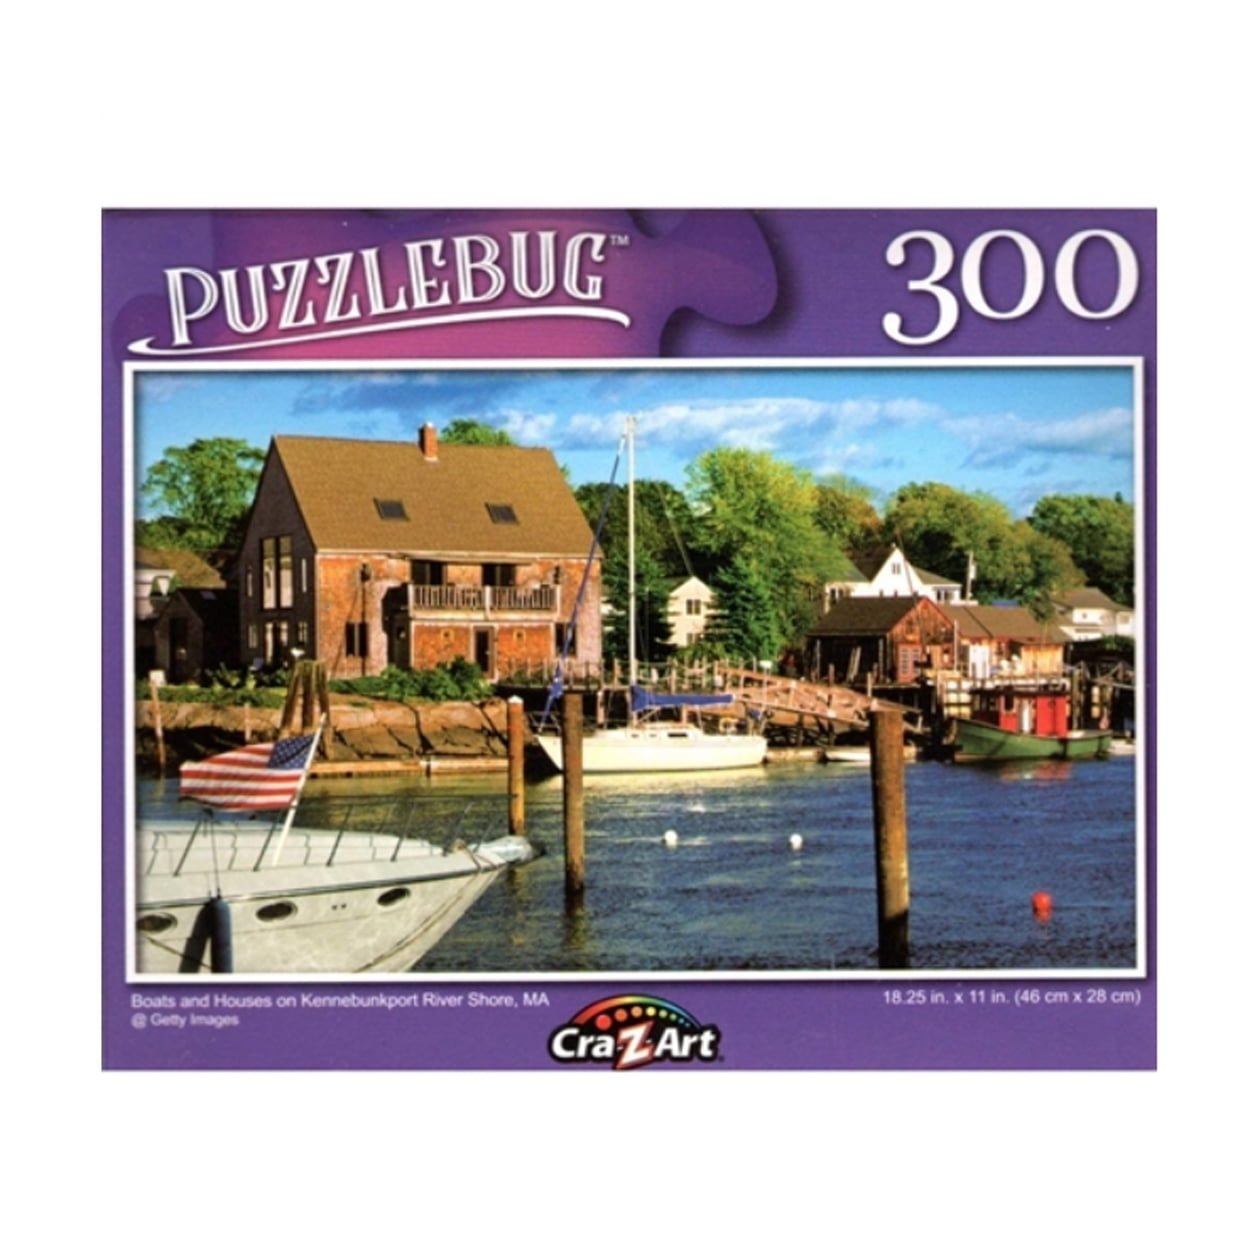 300 Piece Jigsaw Puzzle Puzzlebug New Free Shipping 